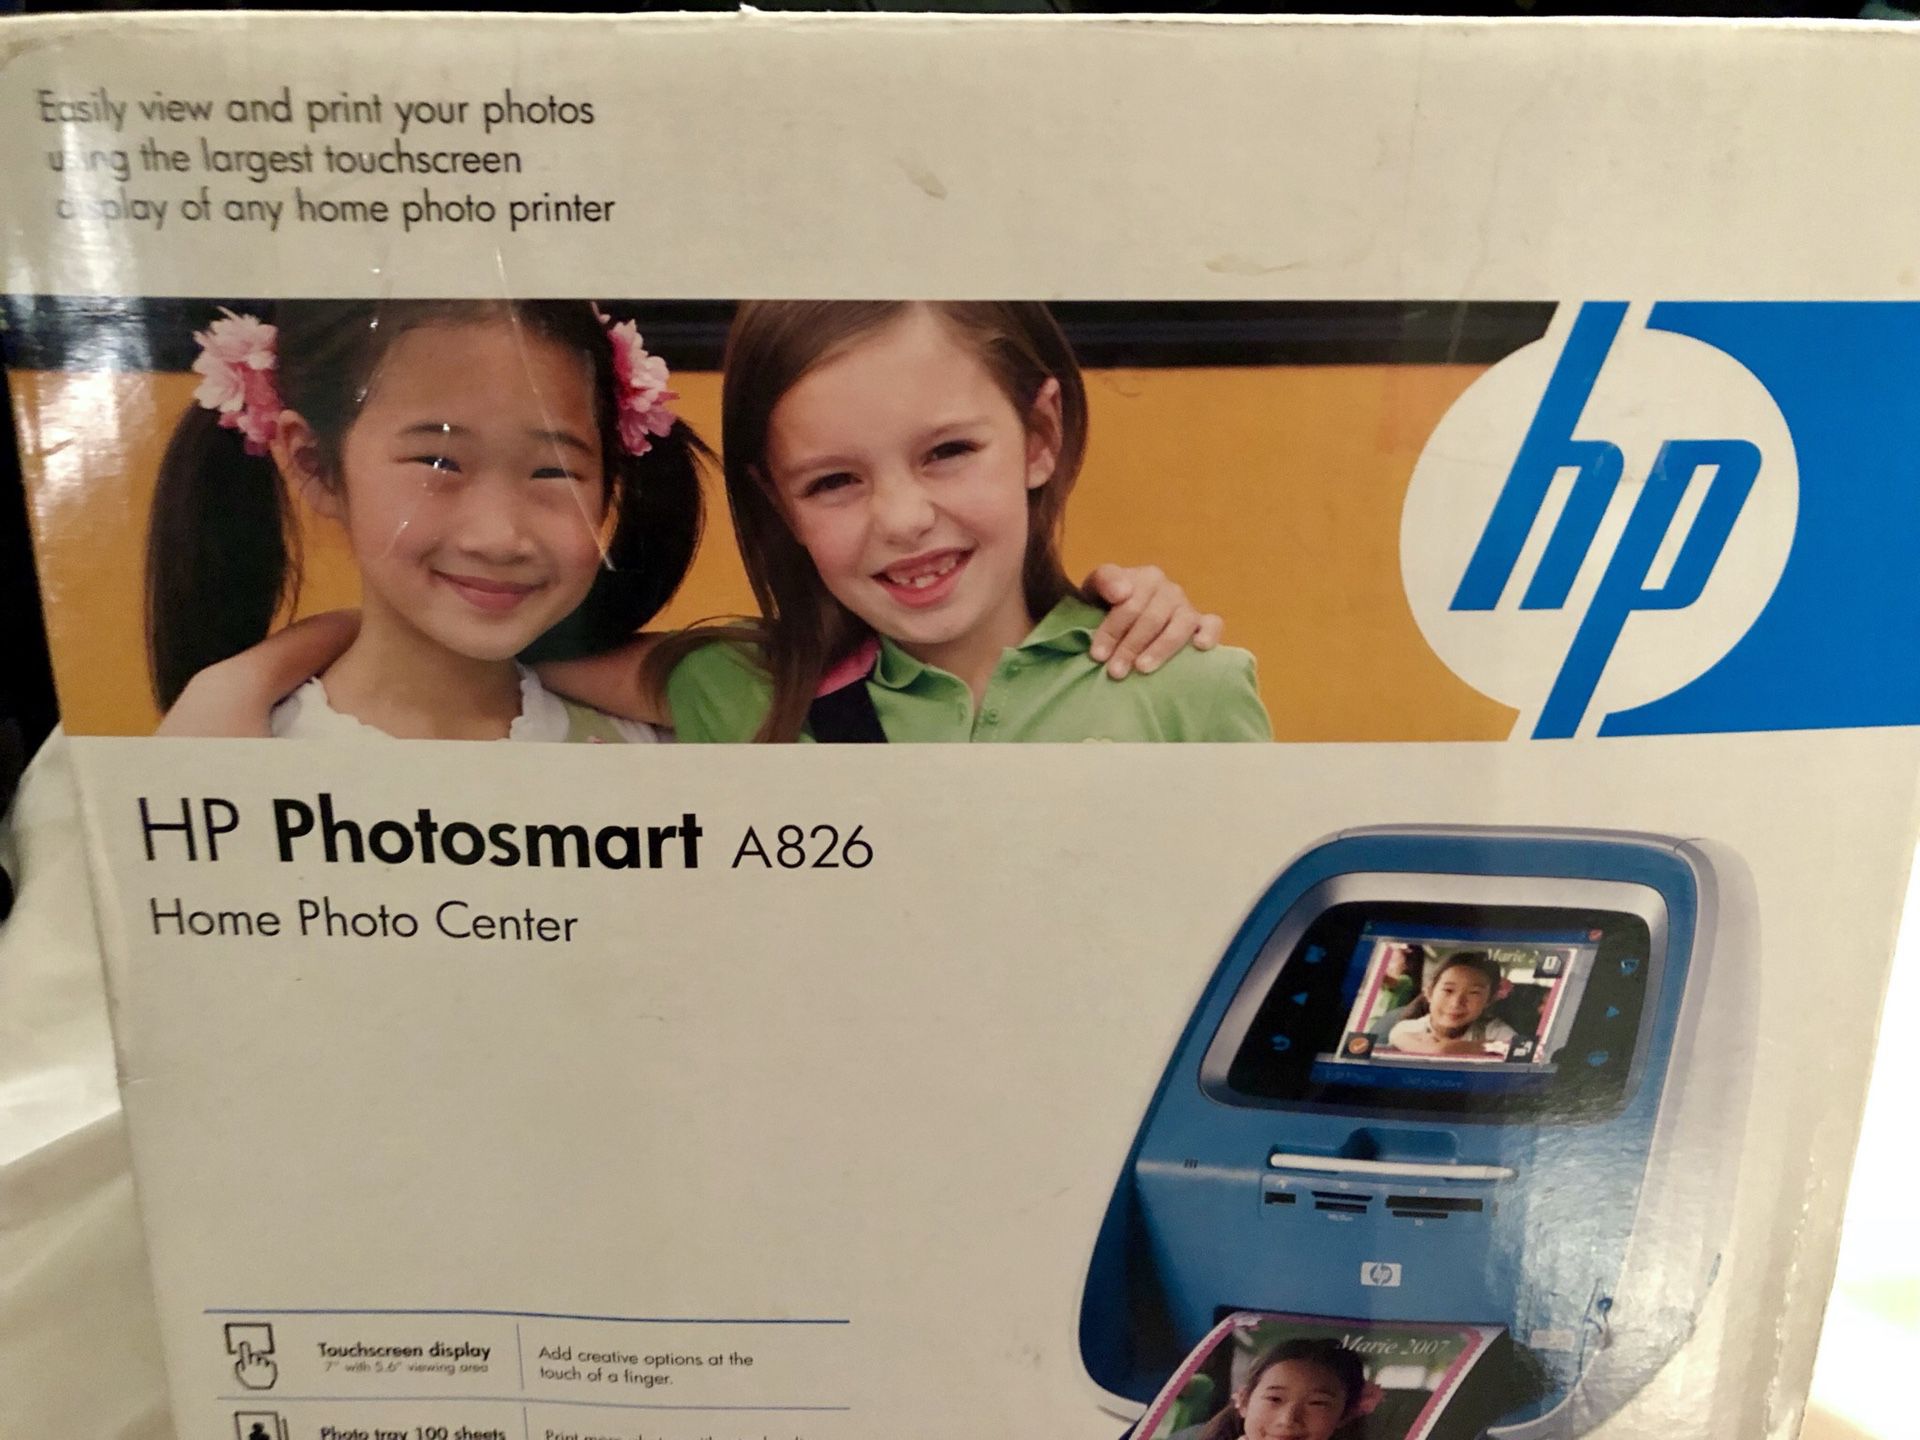 HP Photosmart A826 home photo center